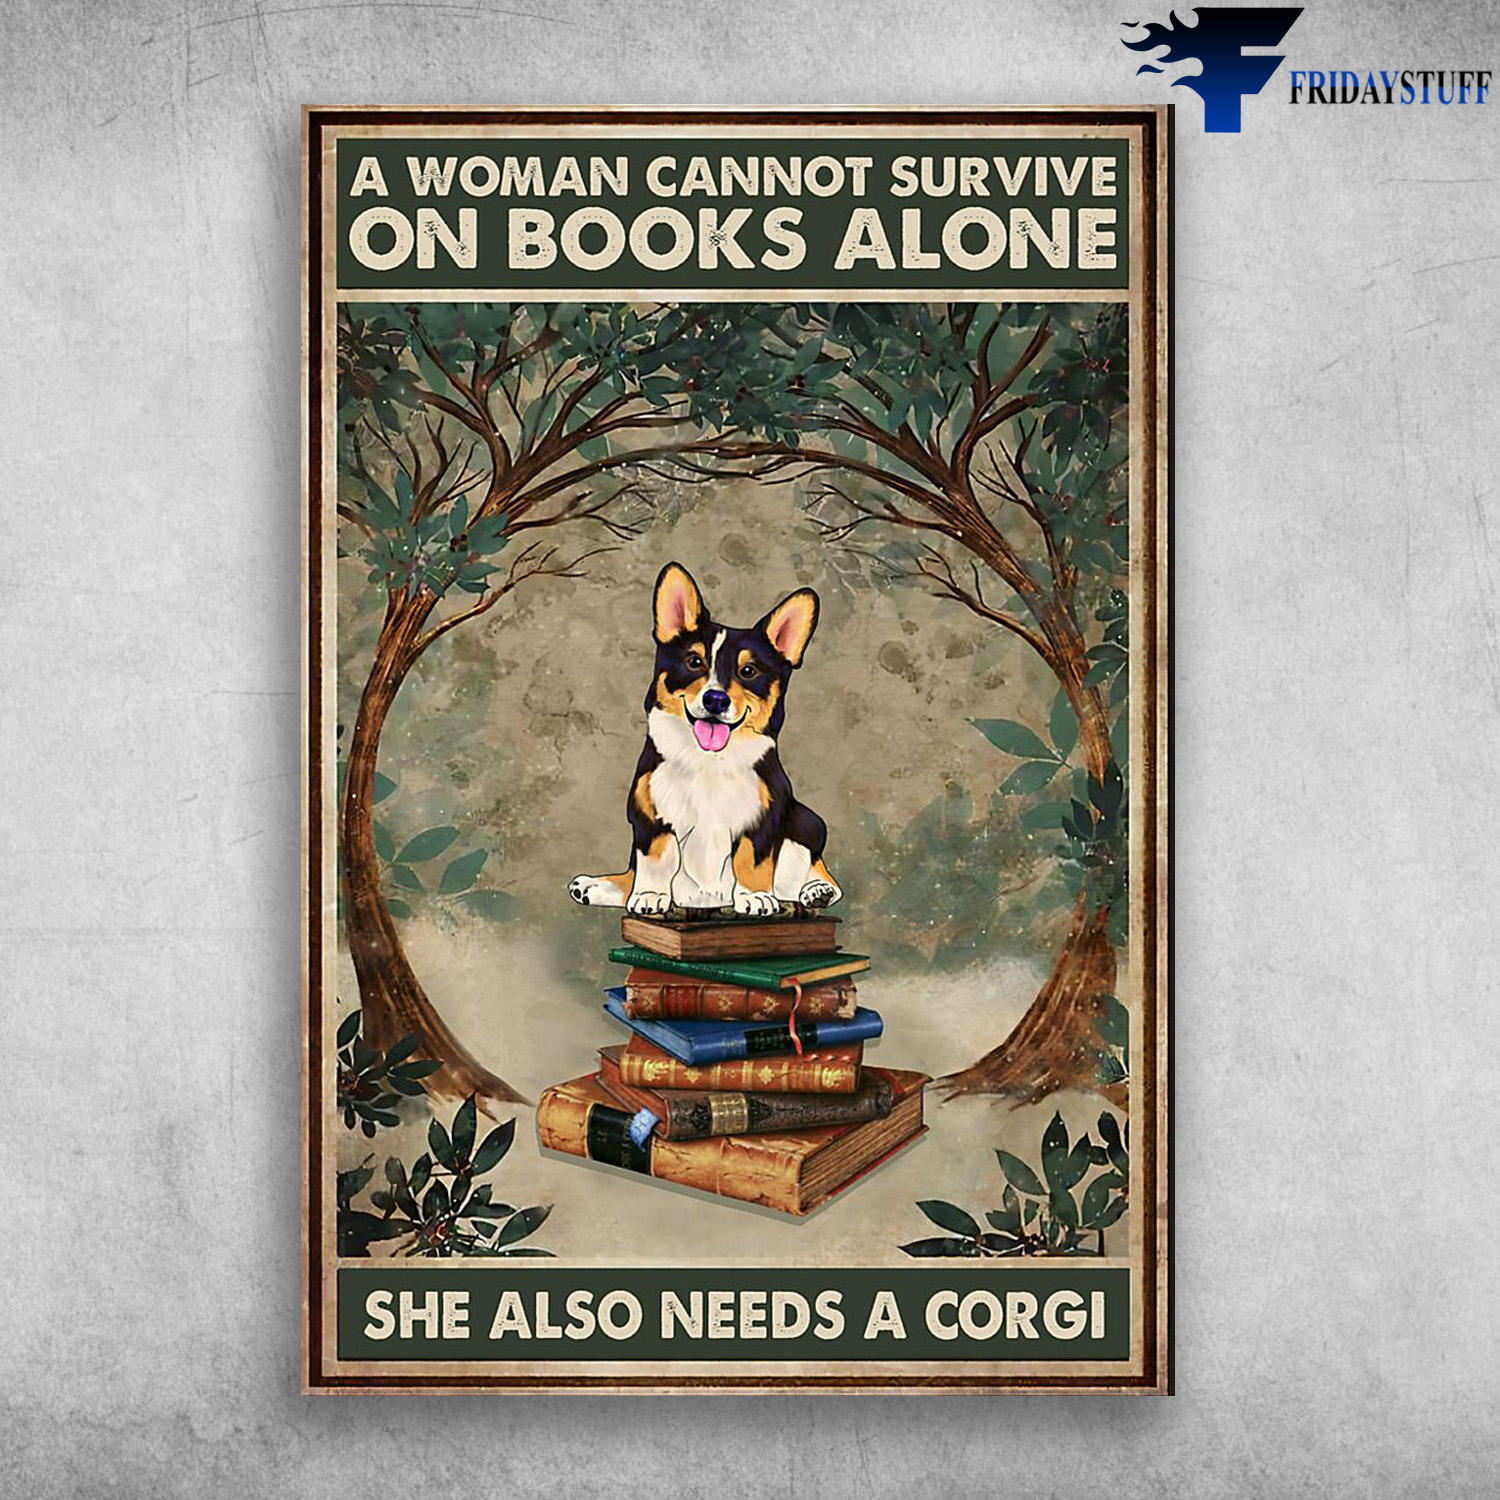 Corgi Sitting On The Books - A Woman Cannot Survive On Books Alone, She Also Needs A Corgi